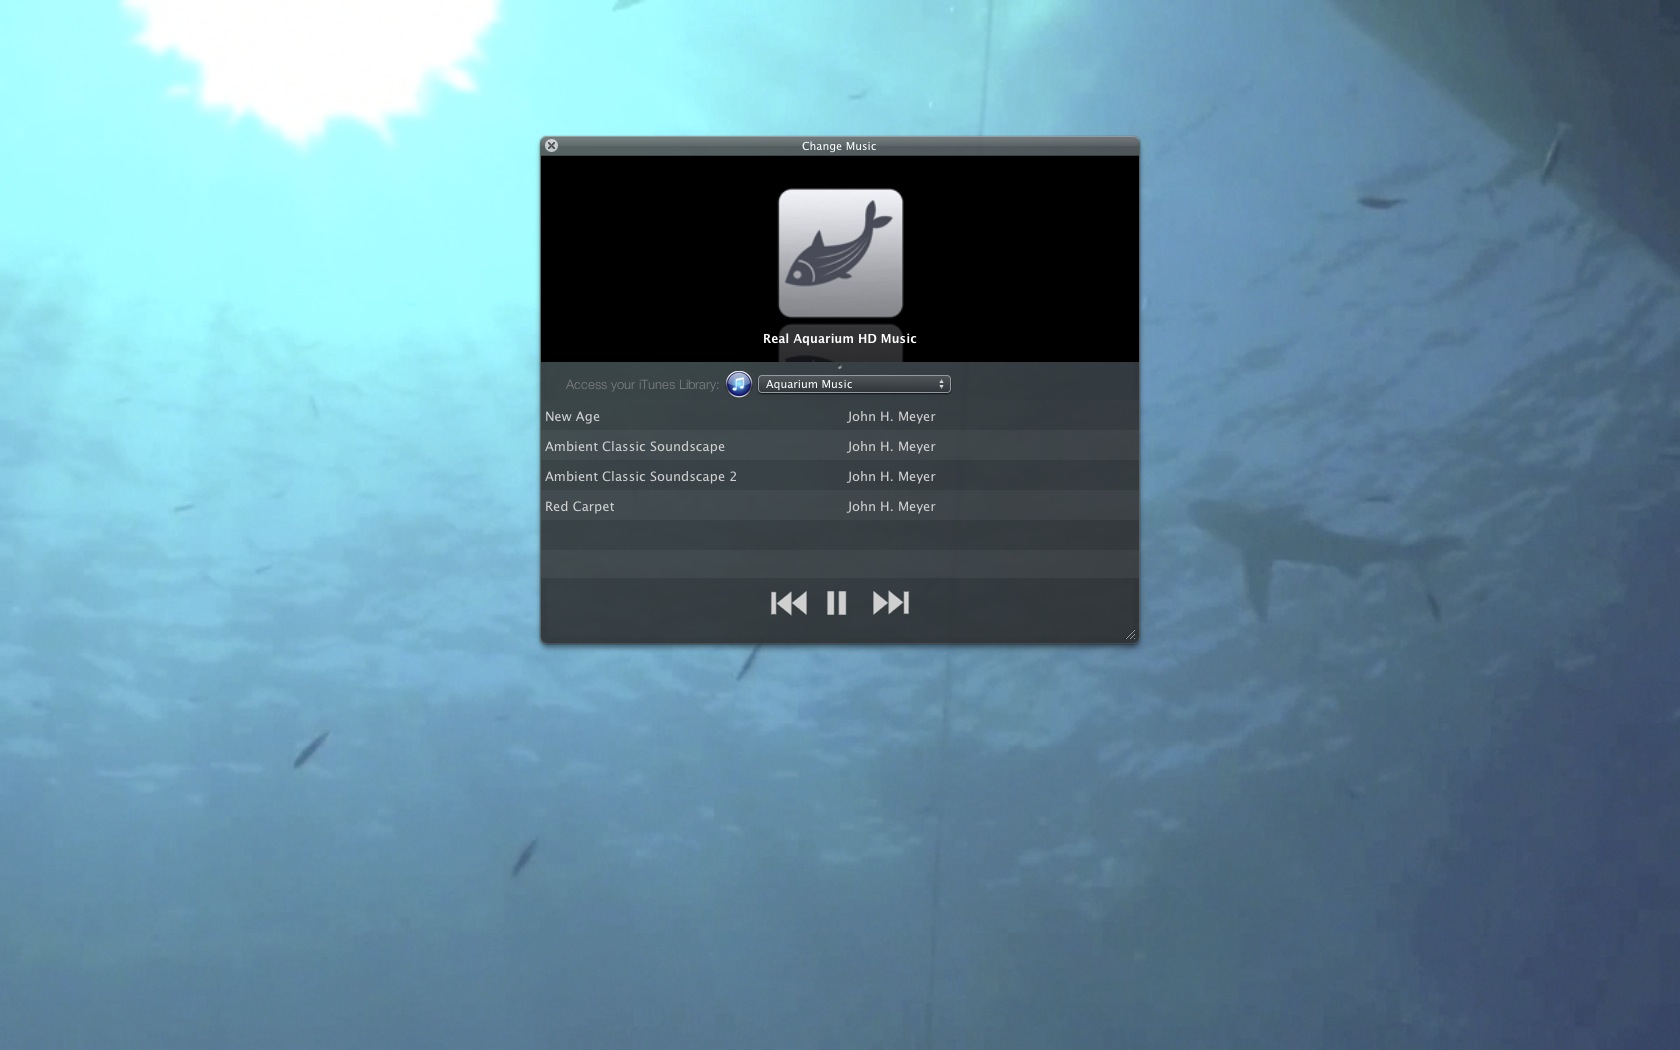 Real Aquarium HD 1.1 : Change music